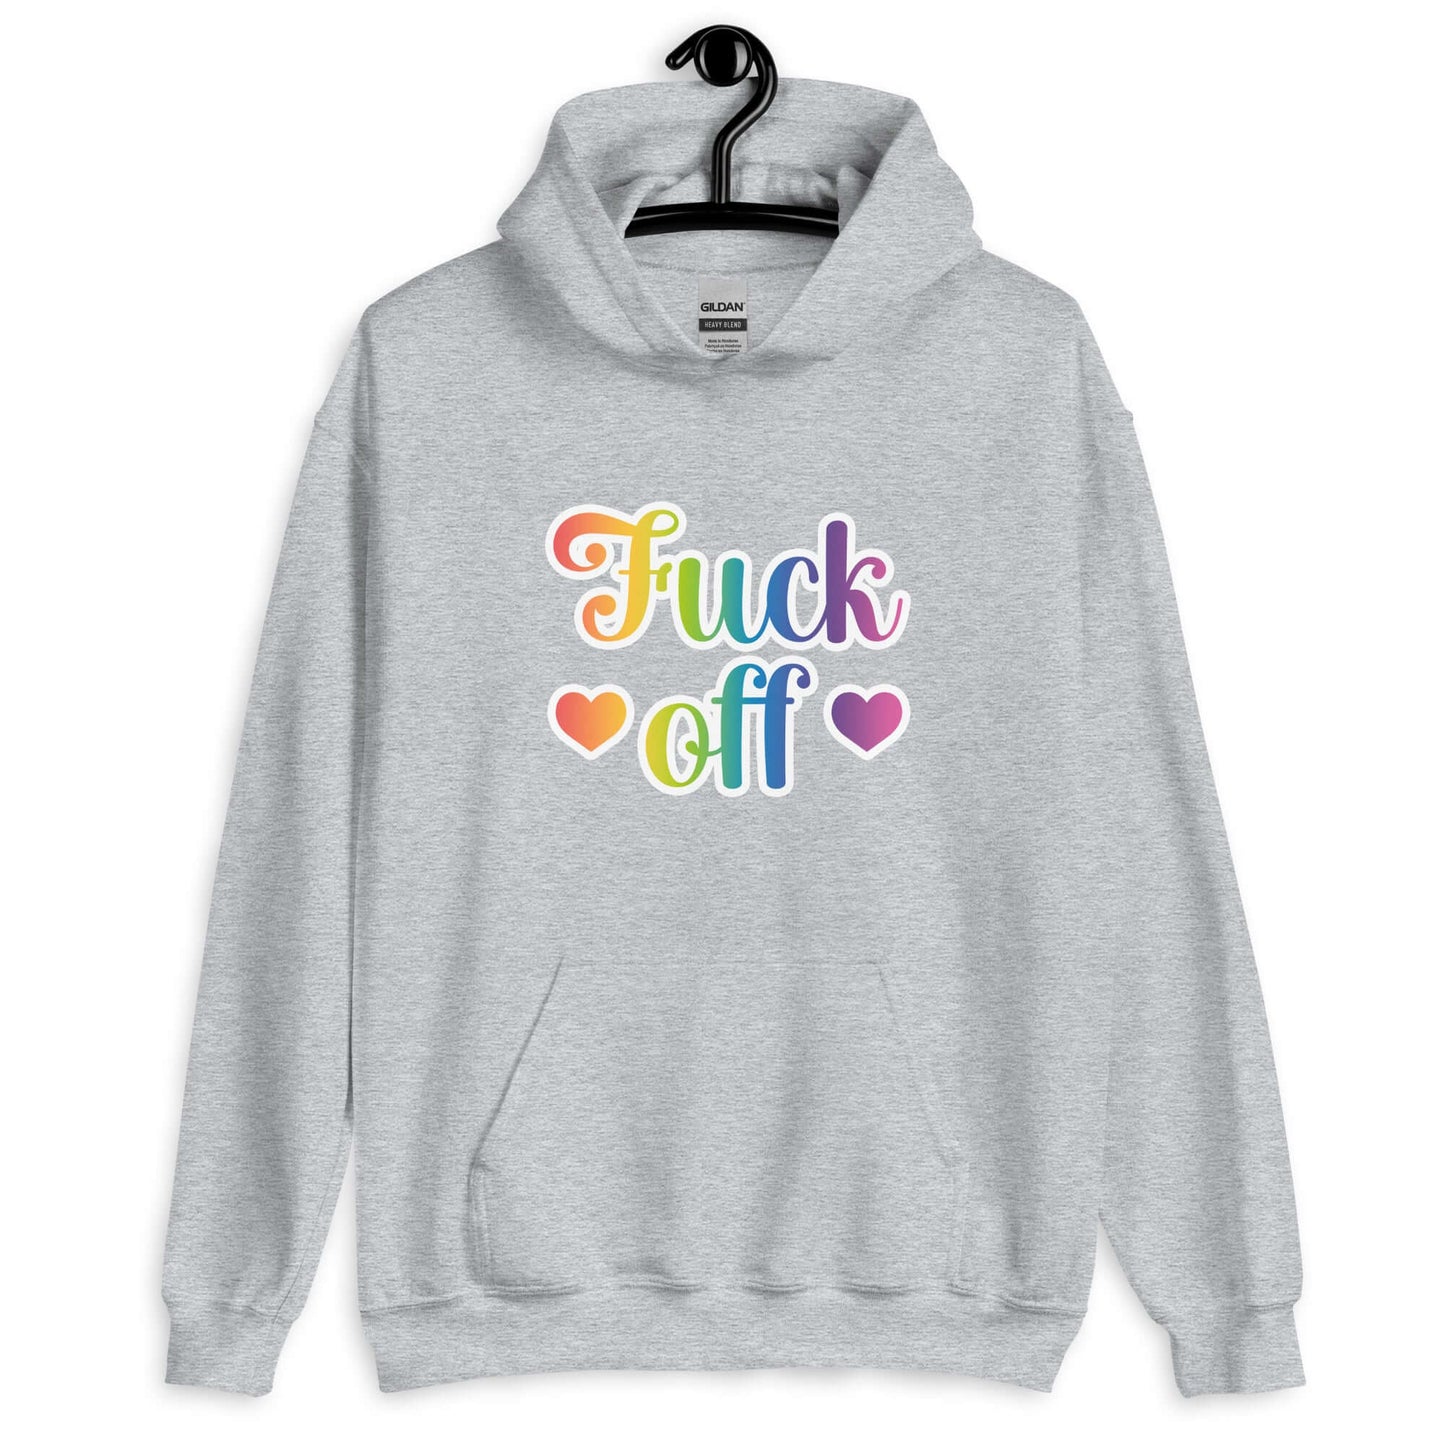 F off hoodie sweatshirt. 80's rainbow font style